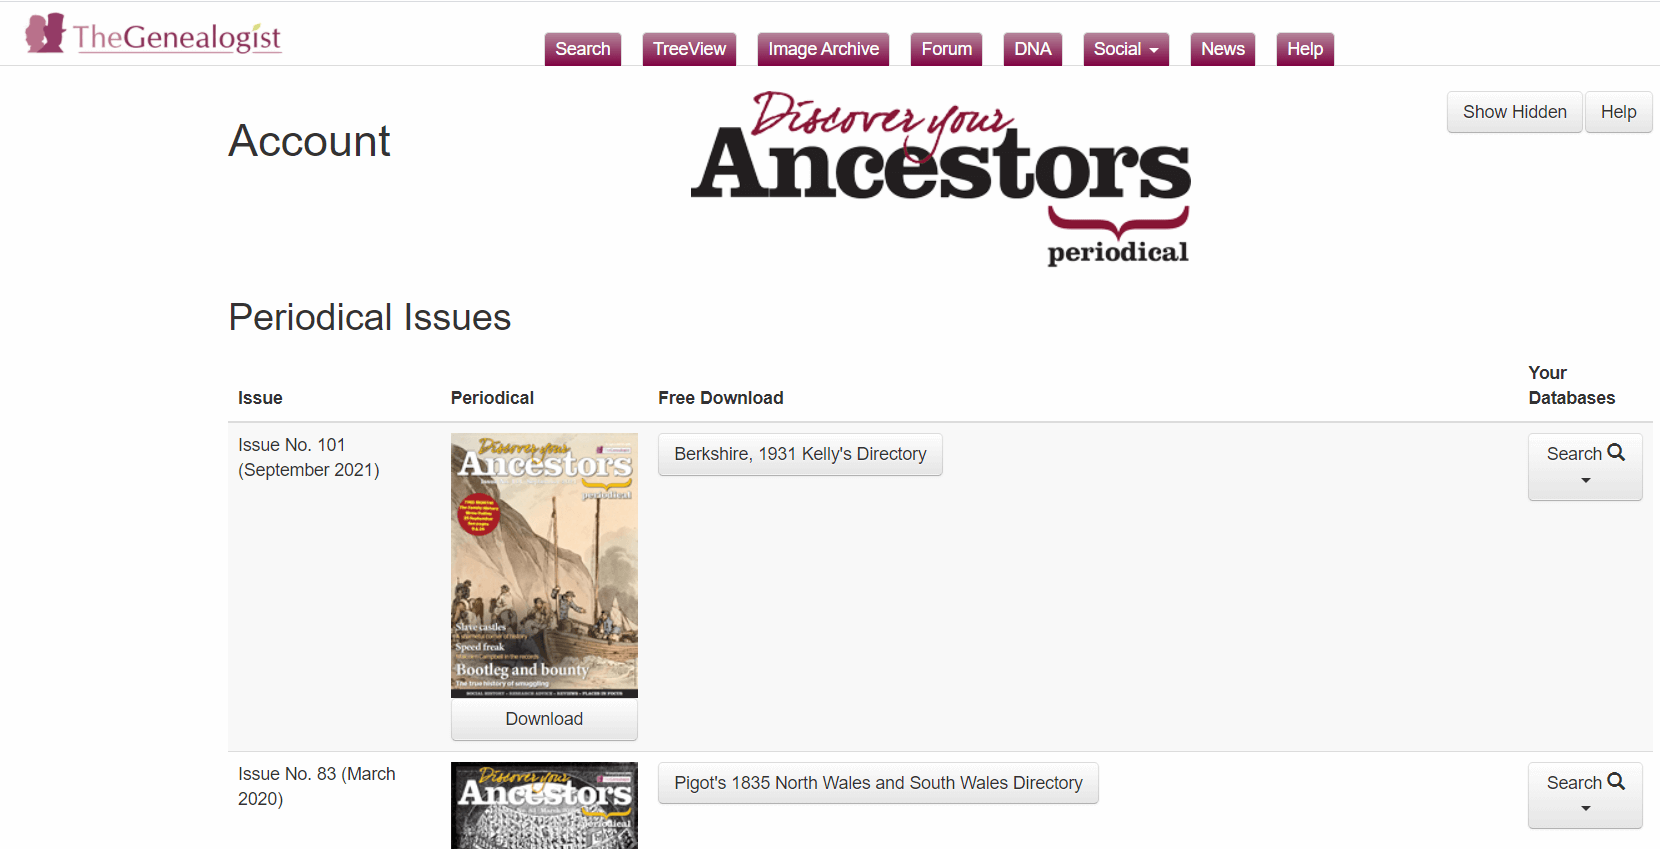 discover-your-ancestors-01-min.png